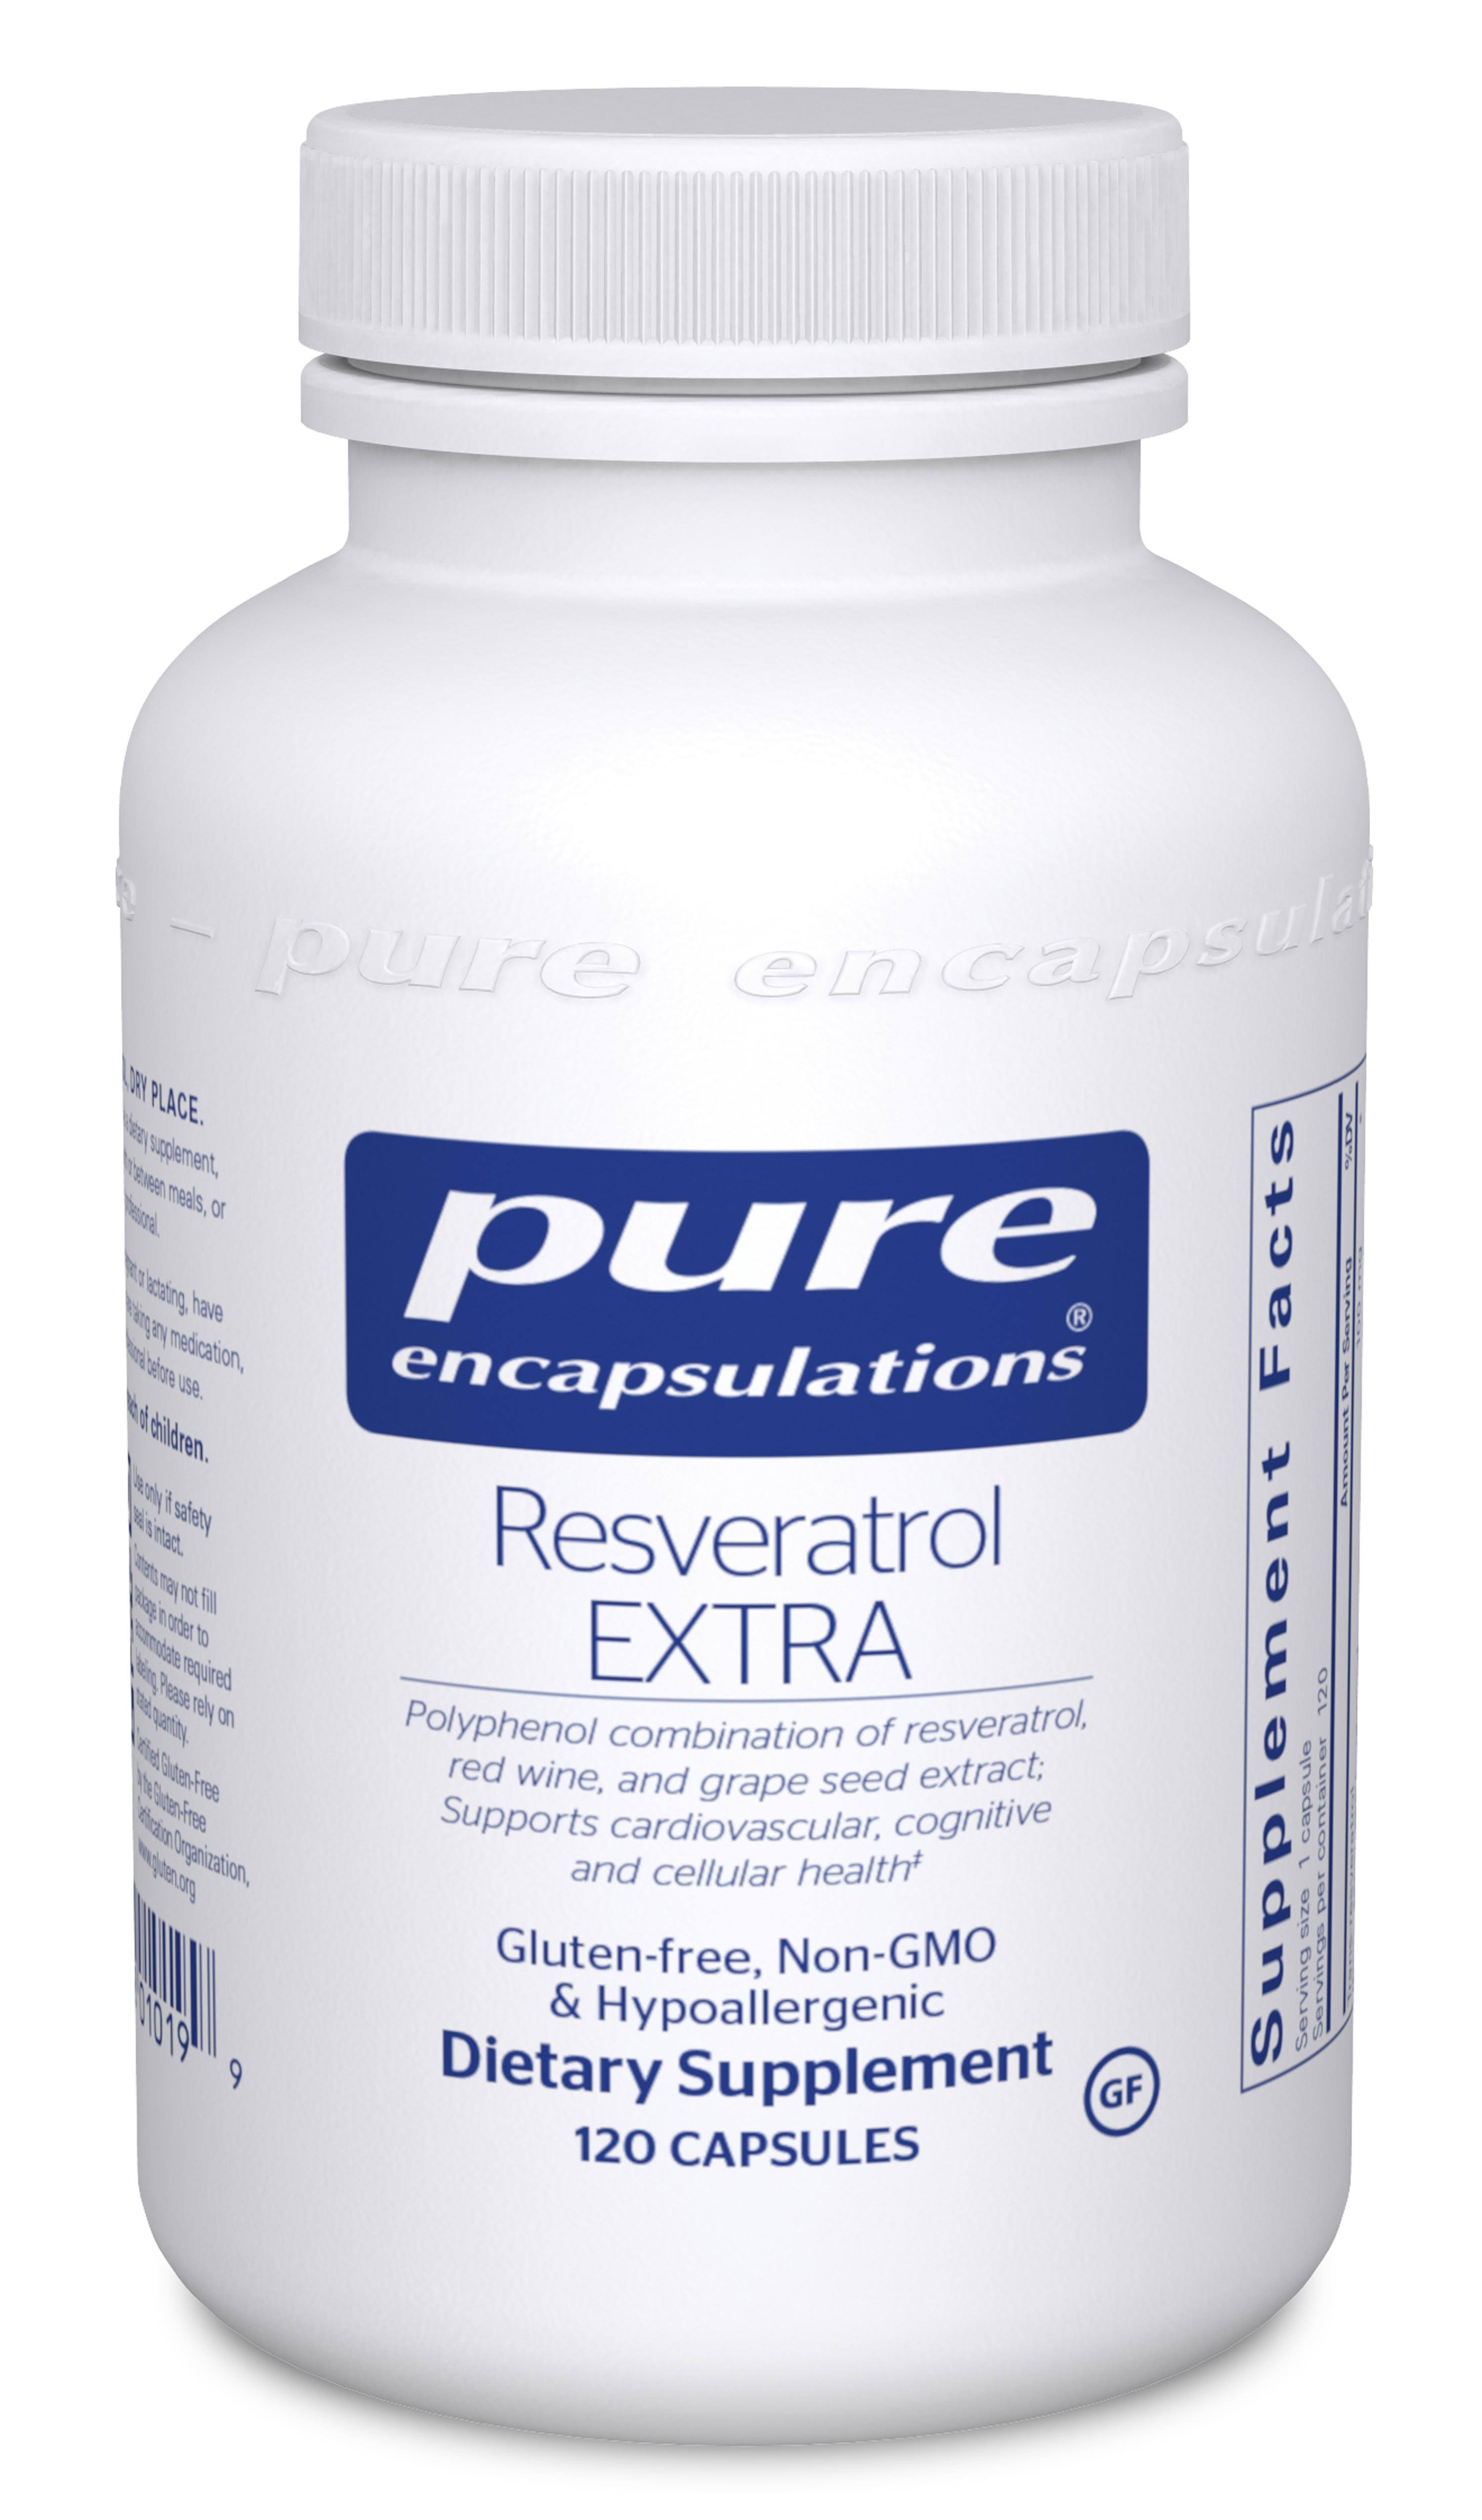 Pure Encapsulations Resveratrol Extra Dietary Supplement - 120 Capsules